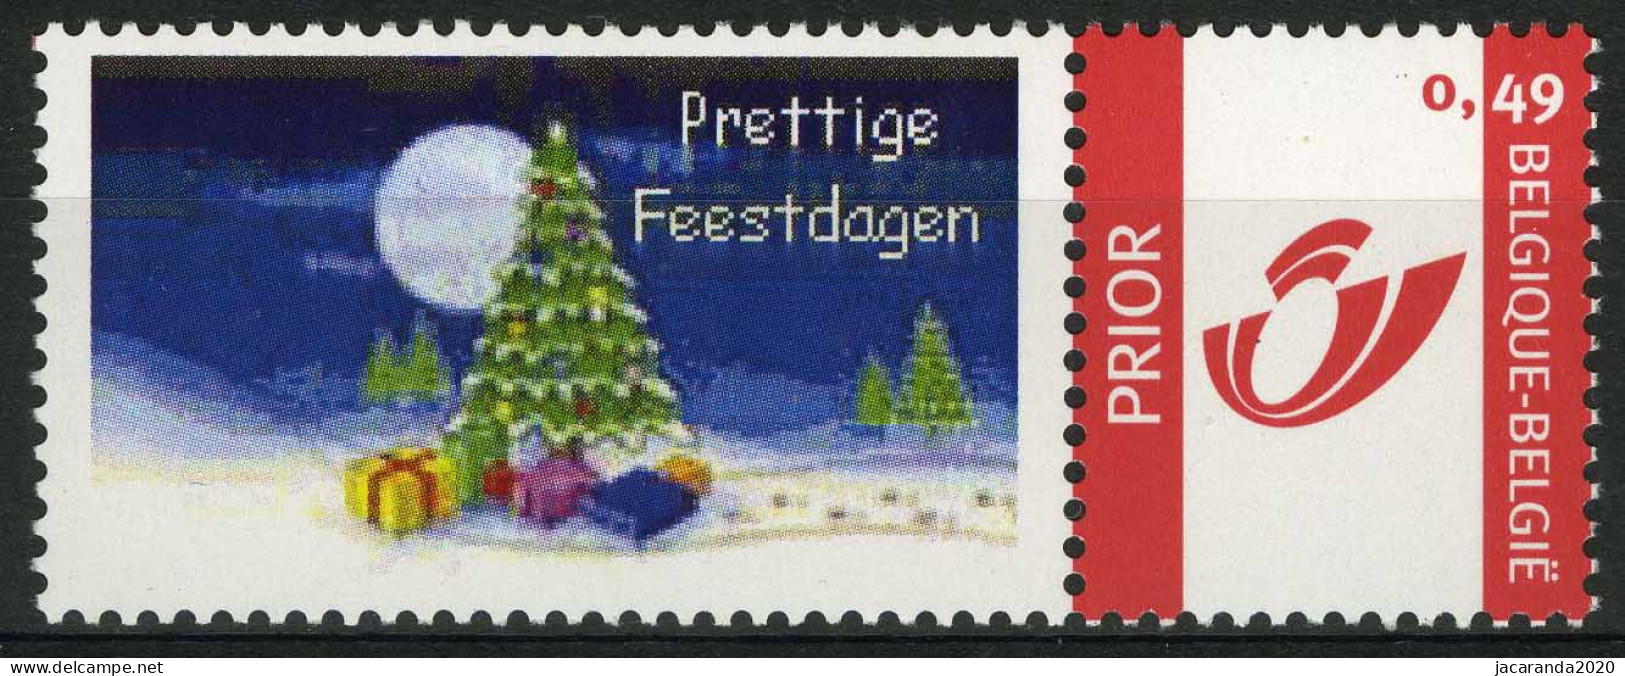 België 3183 - Duostamp - Prettige Feestdagen - Kerstboom - Neufs